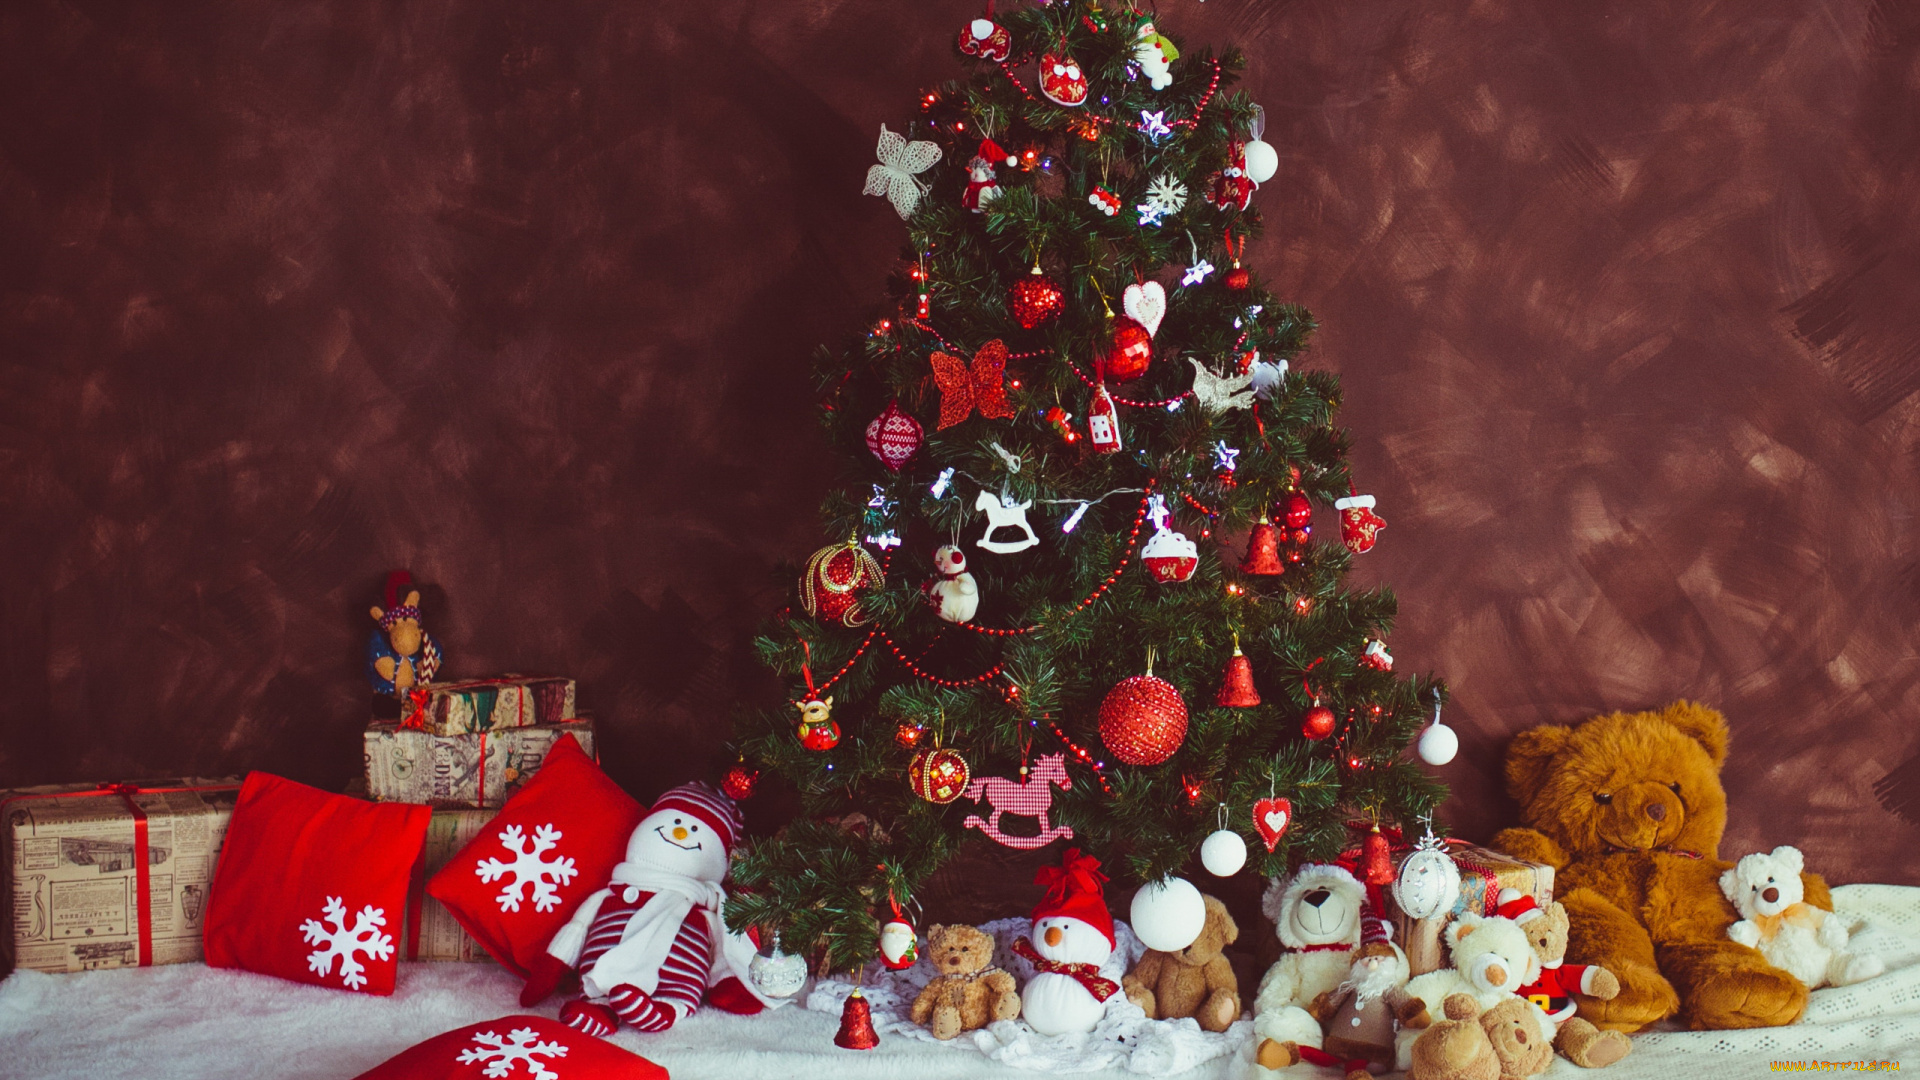 праздничные, ёлки, подушки, елка, игрушки, подарки